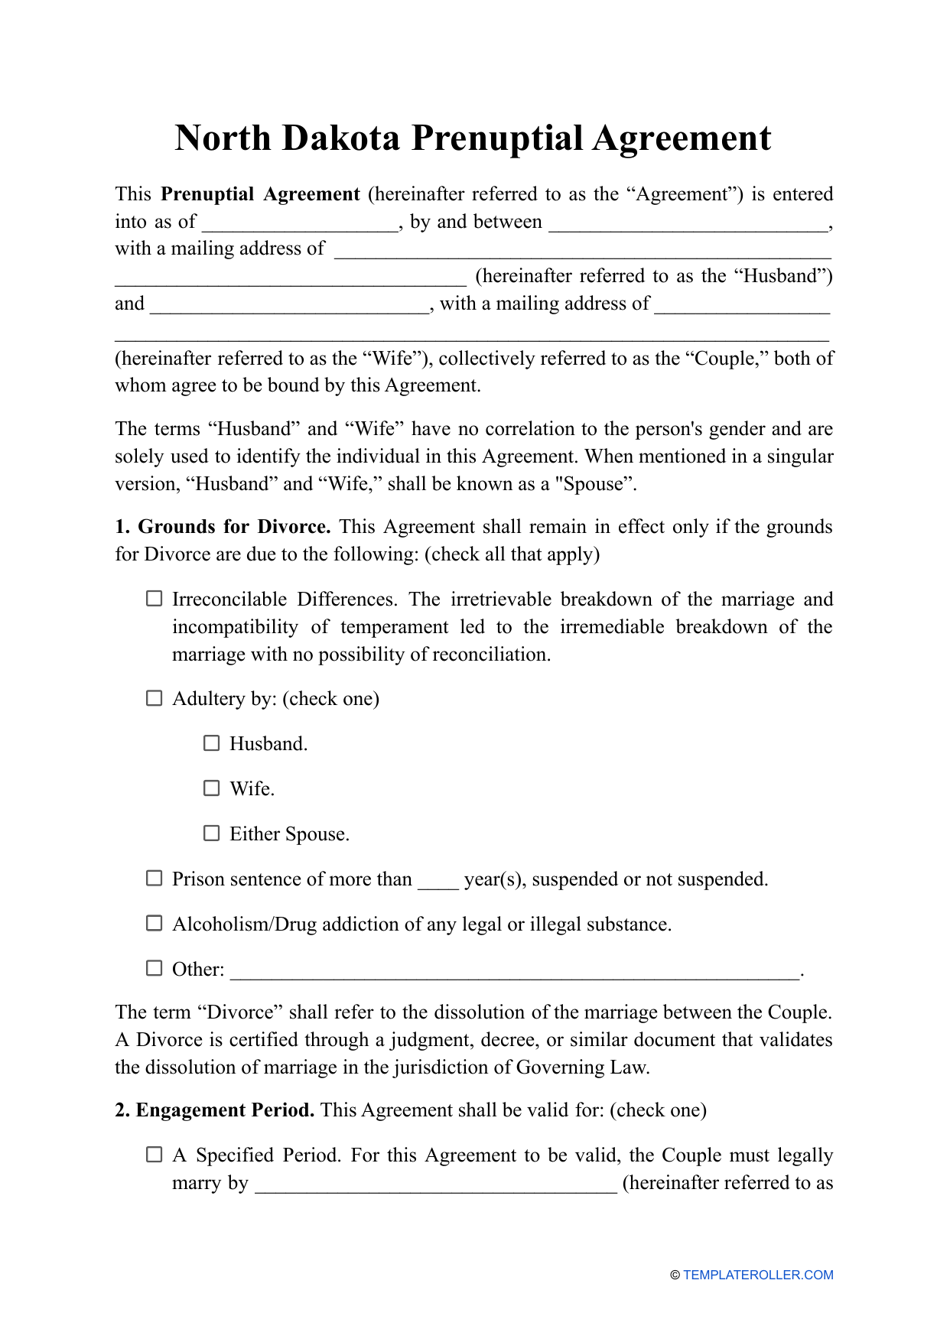 Prenuptial Agreement Template - North Dakota, Page 1